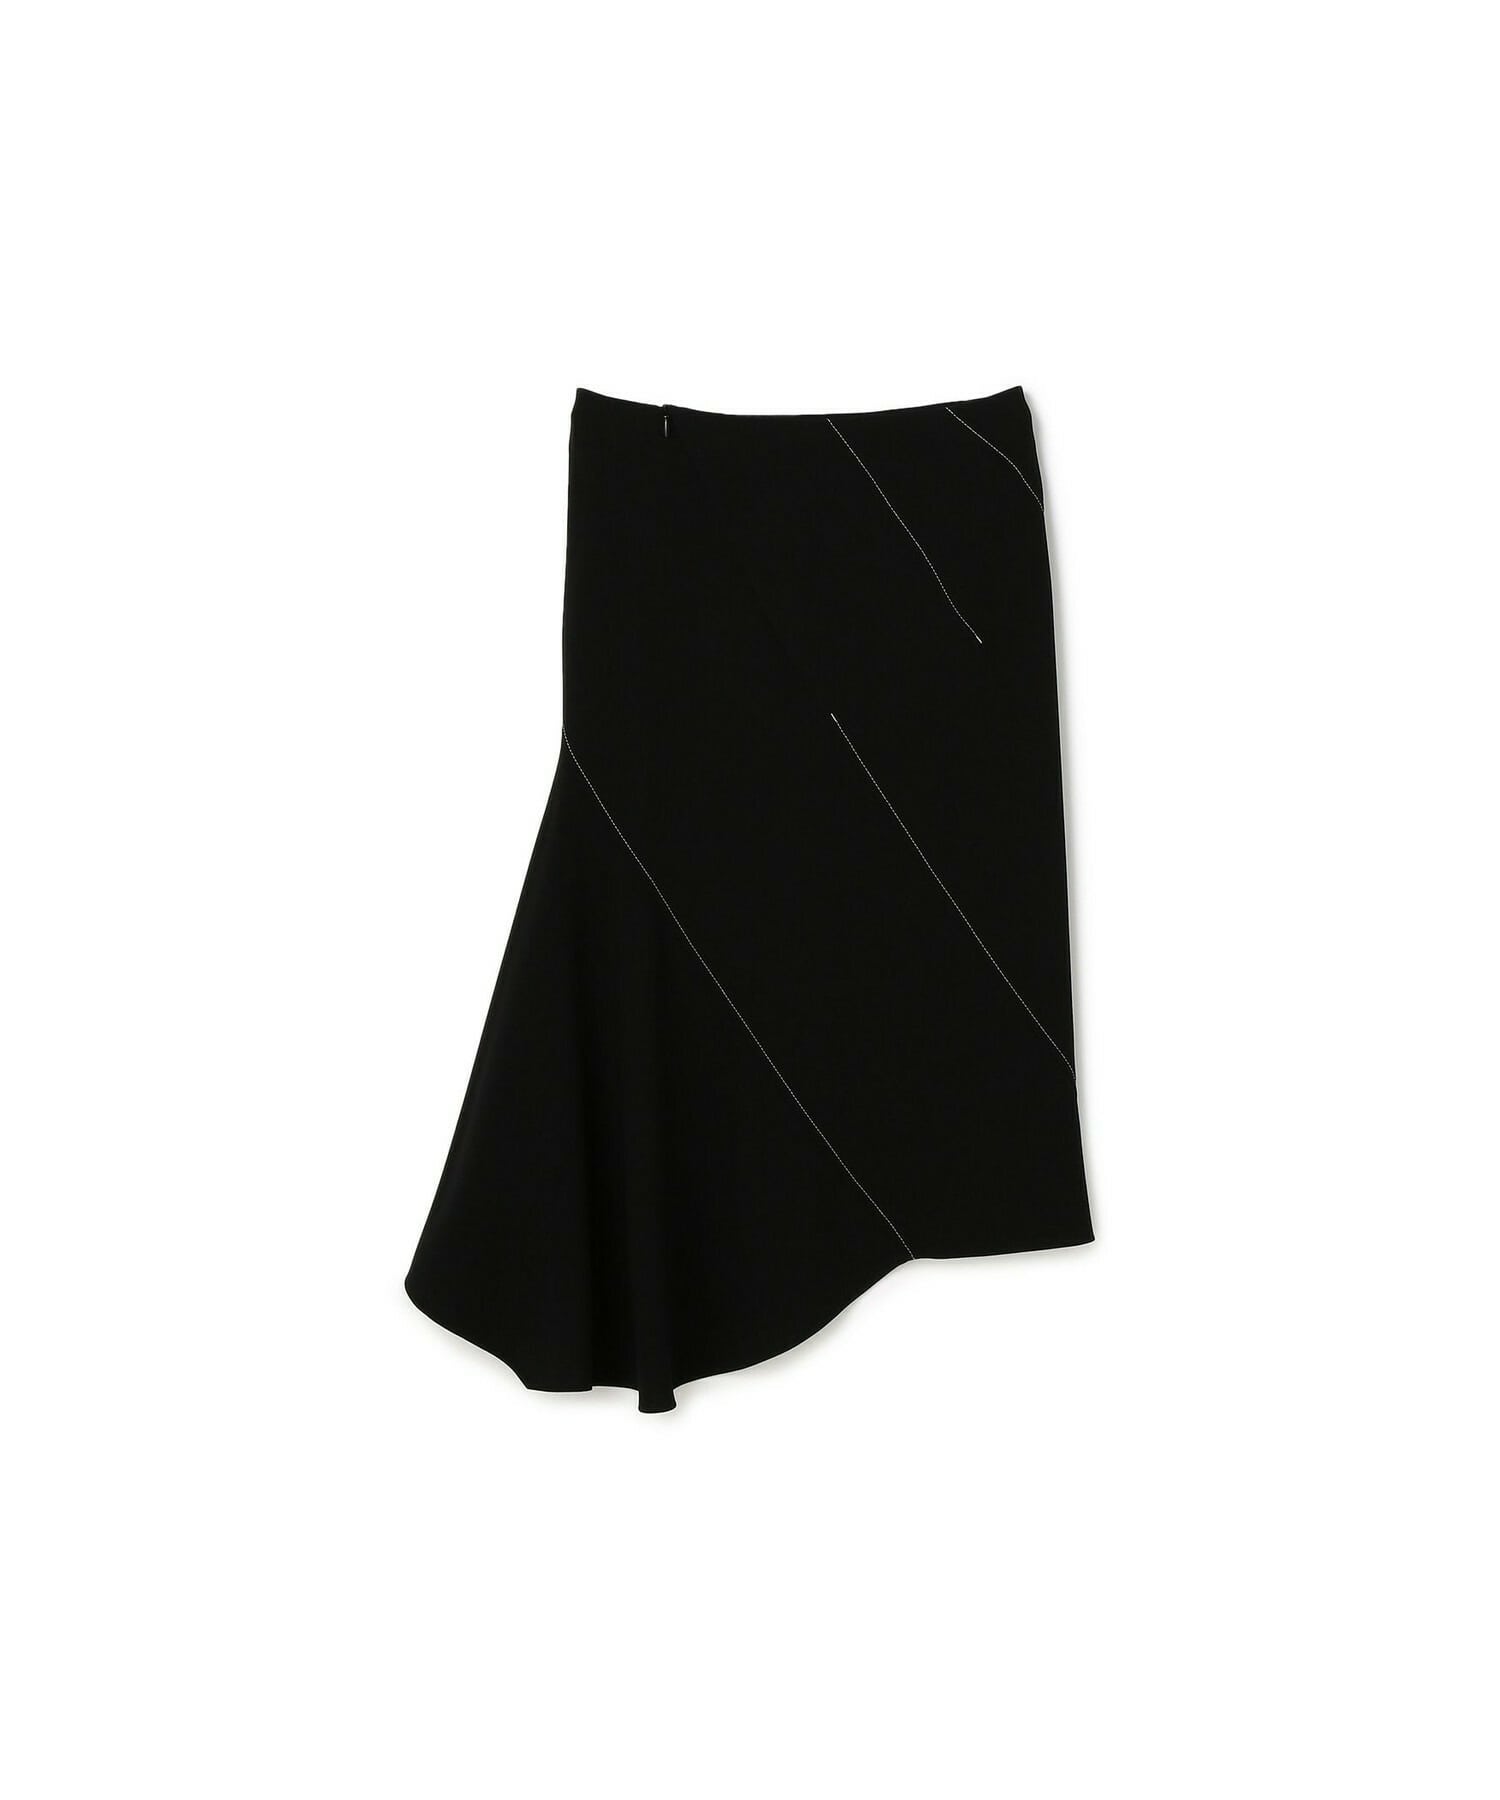 【yoshie inaba】LIGHT DOUBLE CLOTH  “BIAS-CUT” “SPIRAL SEAMED” SKIRT 詳細画像 ブラック 6